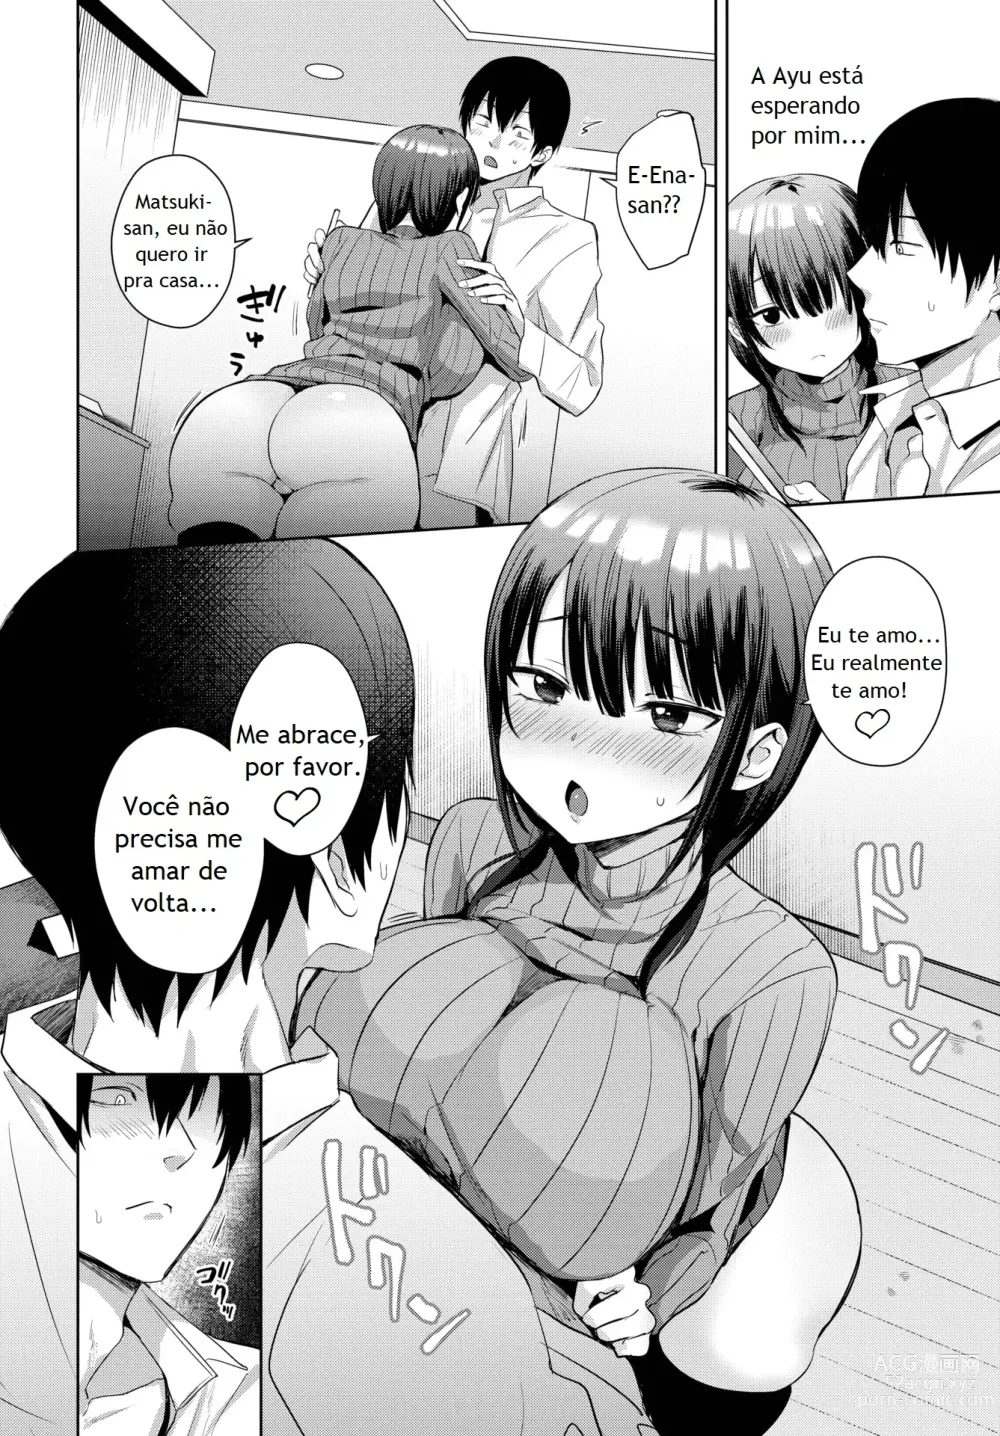 Page 10 of manga Furaretori - Its mine.